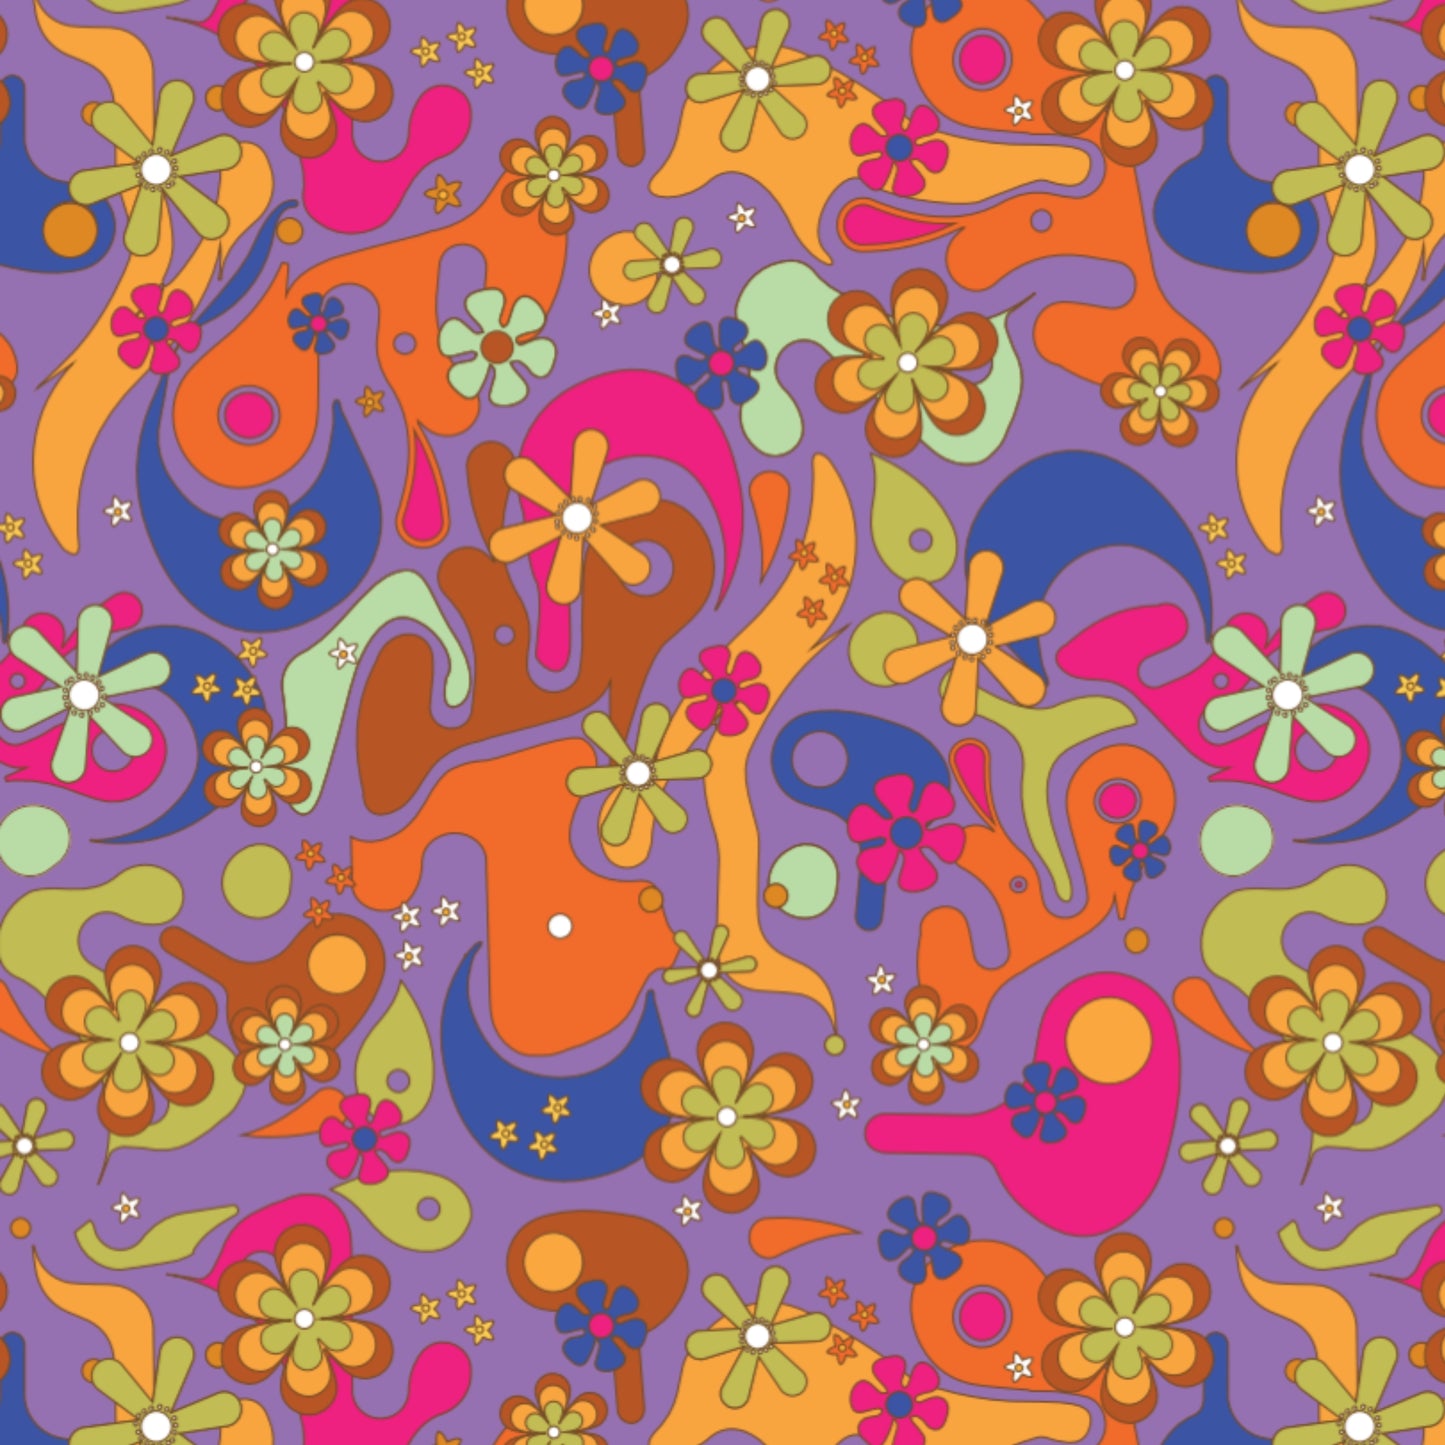 Flower-Power-Floral-Woodstock-Psychedelic-Kitsch-Retro-RainbowsAndFairies.com.au-FLOPO_ORG-01